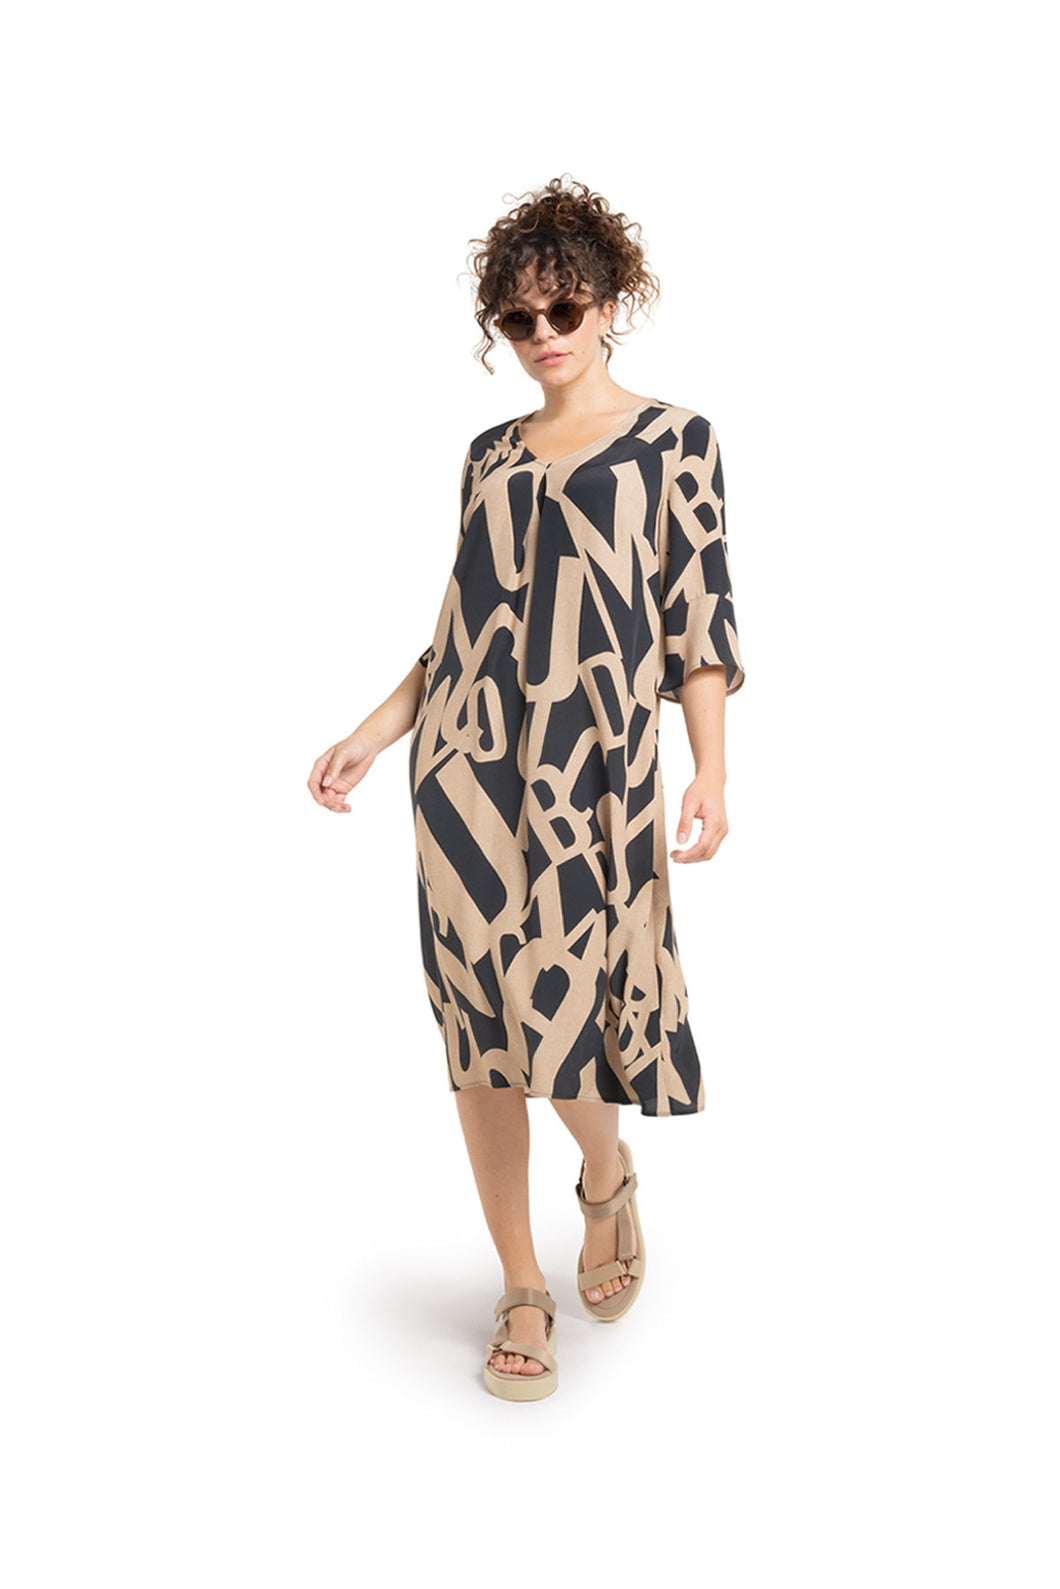 Doris Streich Beige & Black Pattern Mid Length Dress